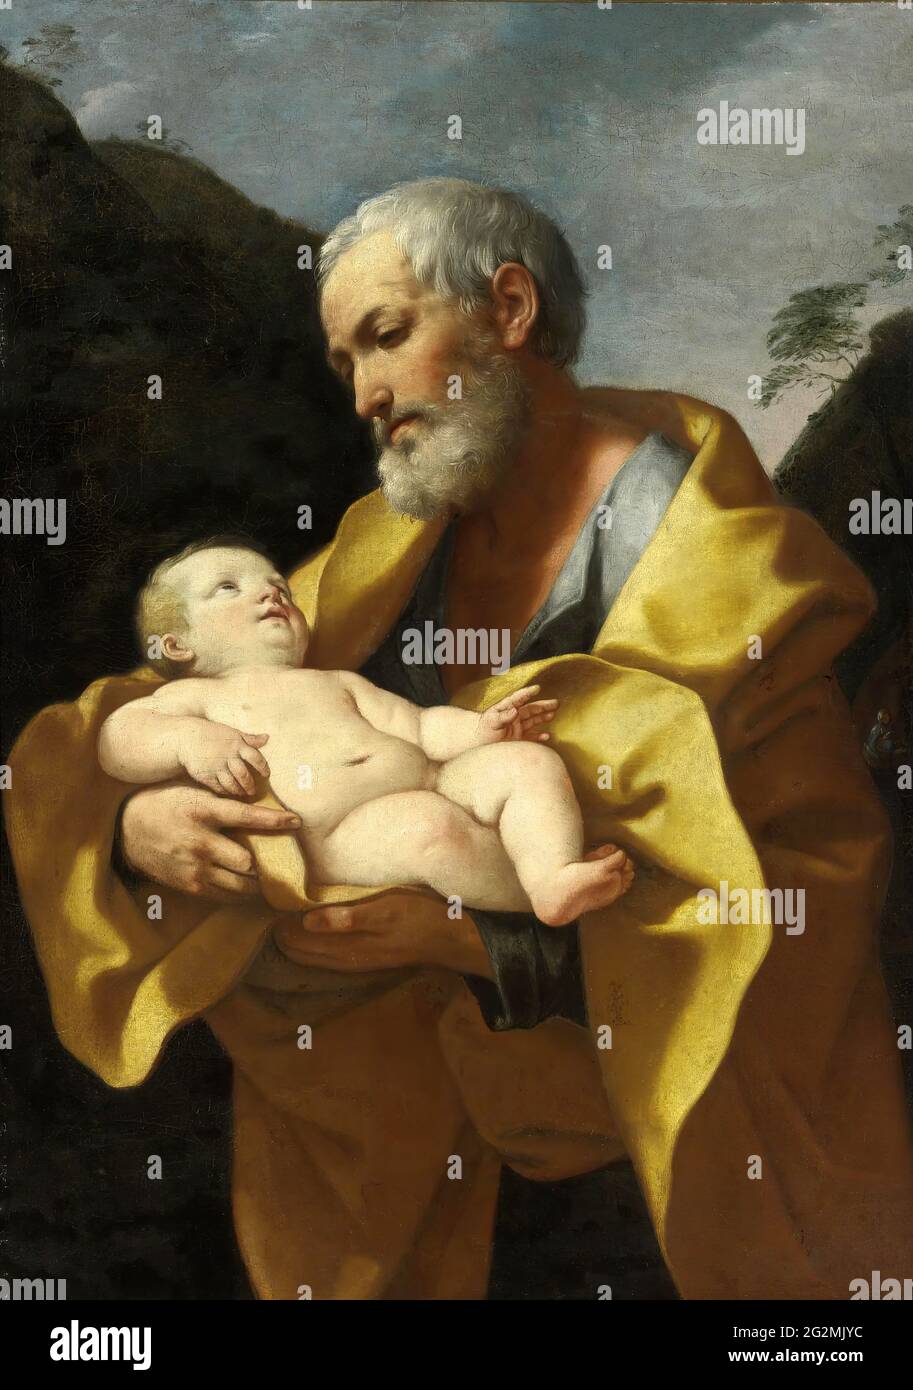 Guido reni - San Giuseppe e il Cristo Bambino Foto stock - Alamy